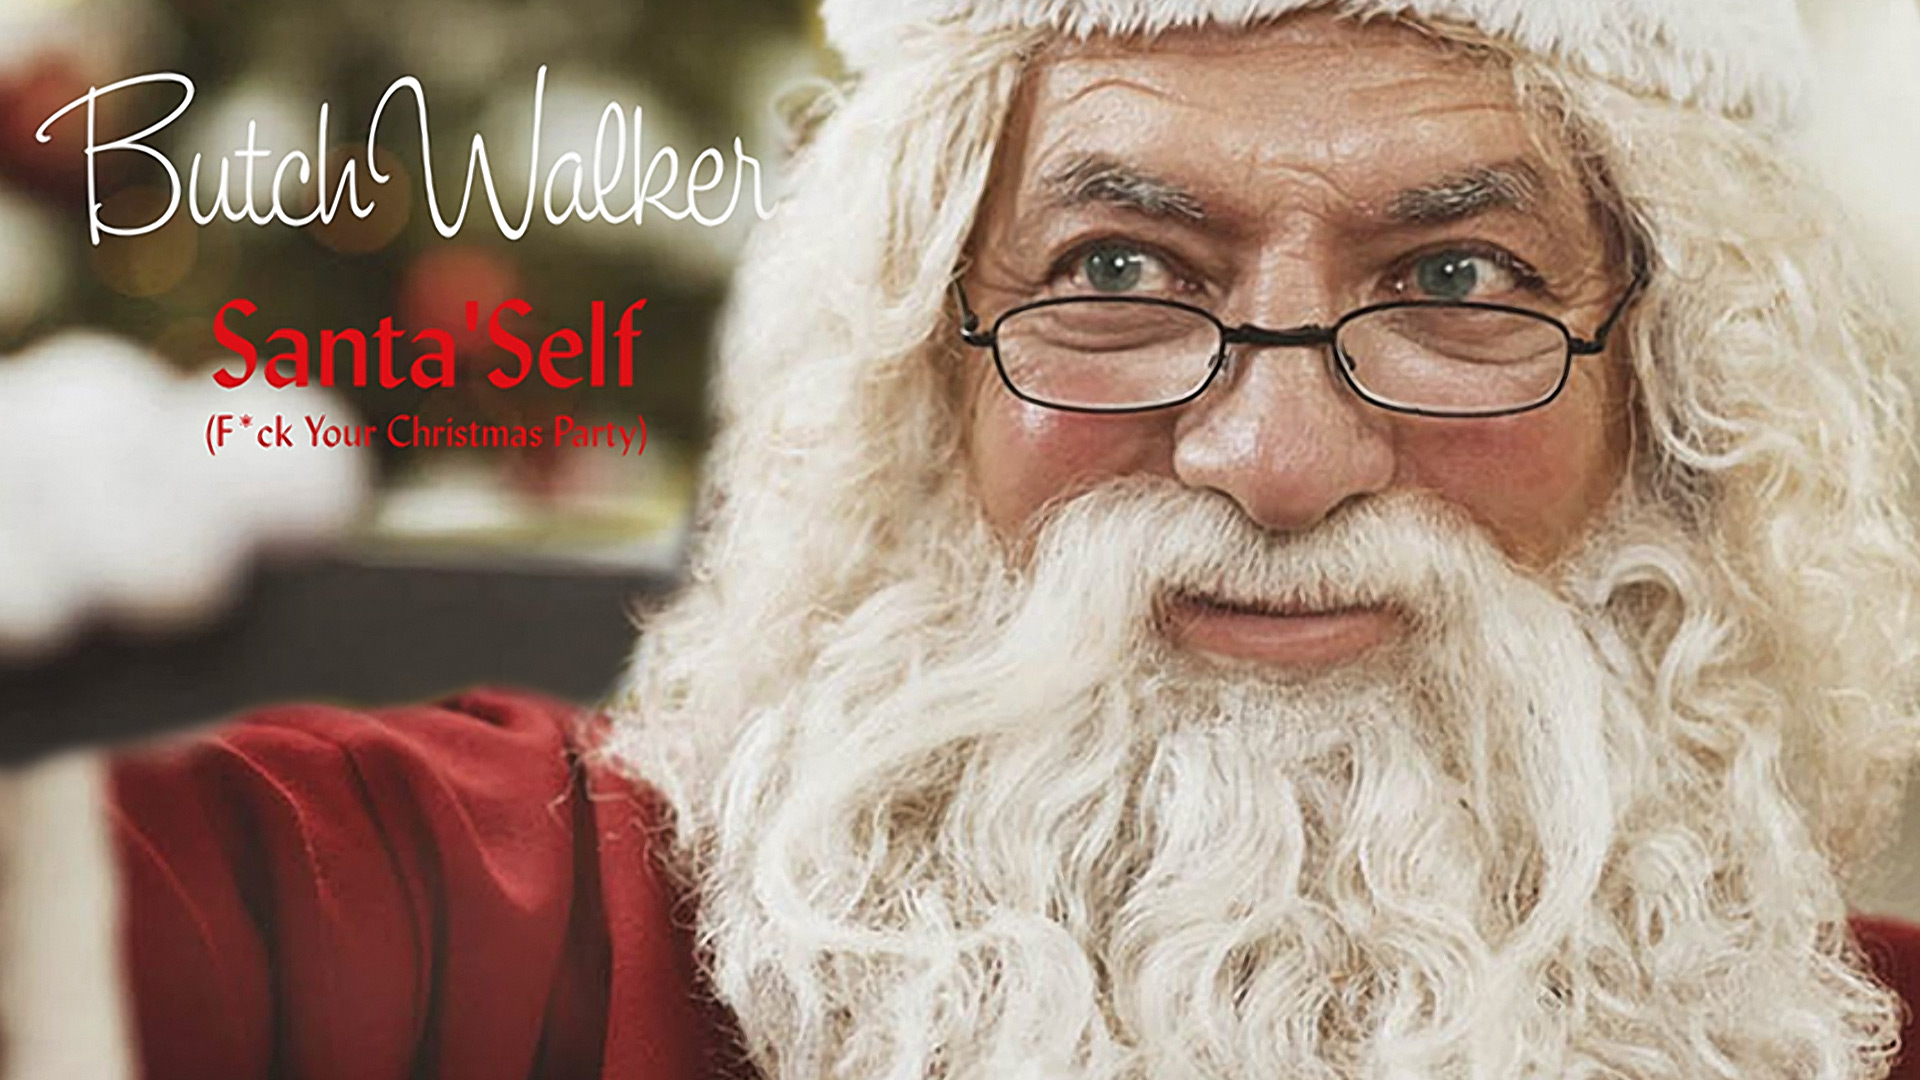 Butch Walker - Santa'Self (F*ck Your Christmas Party)